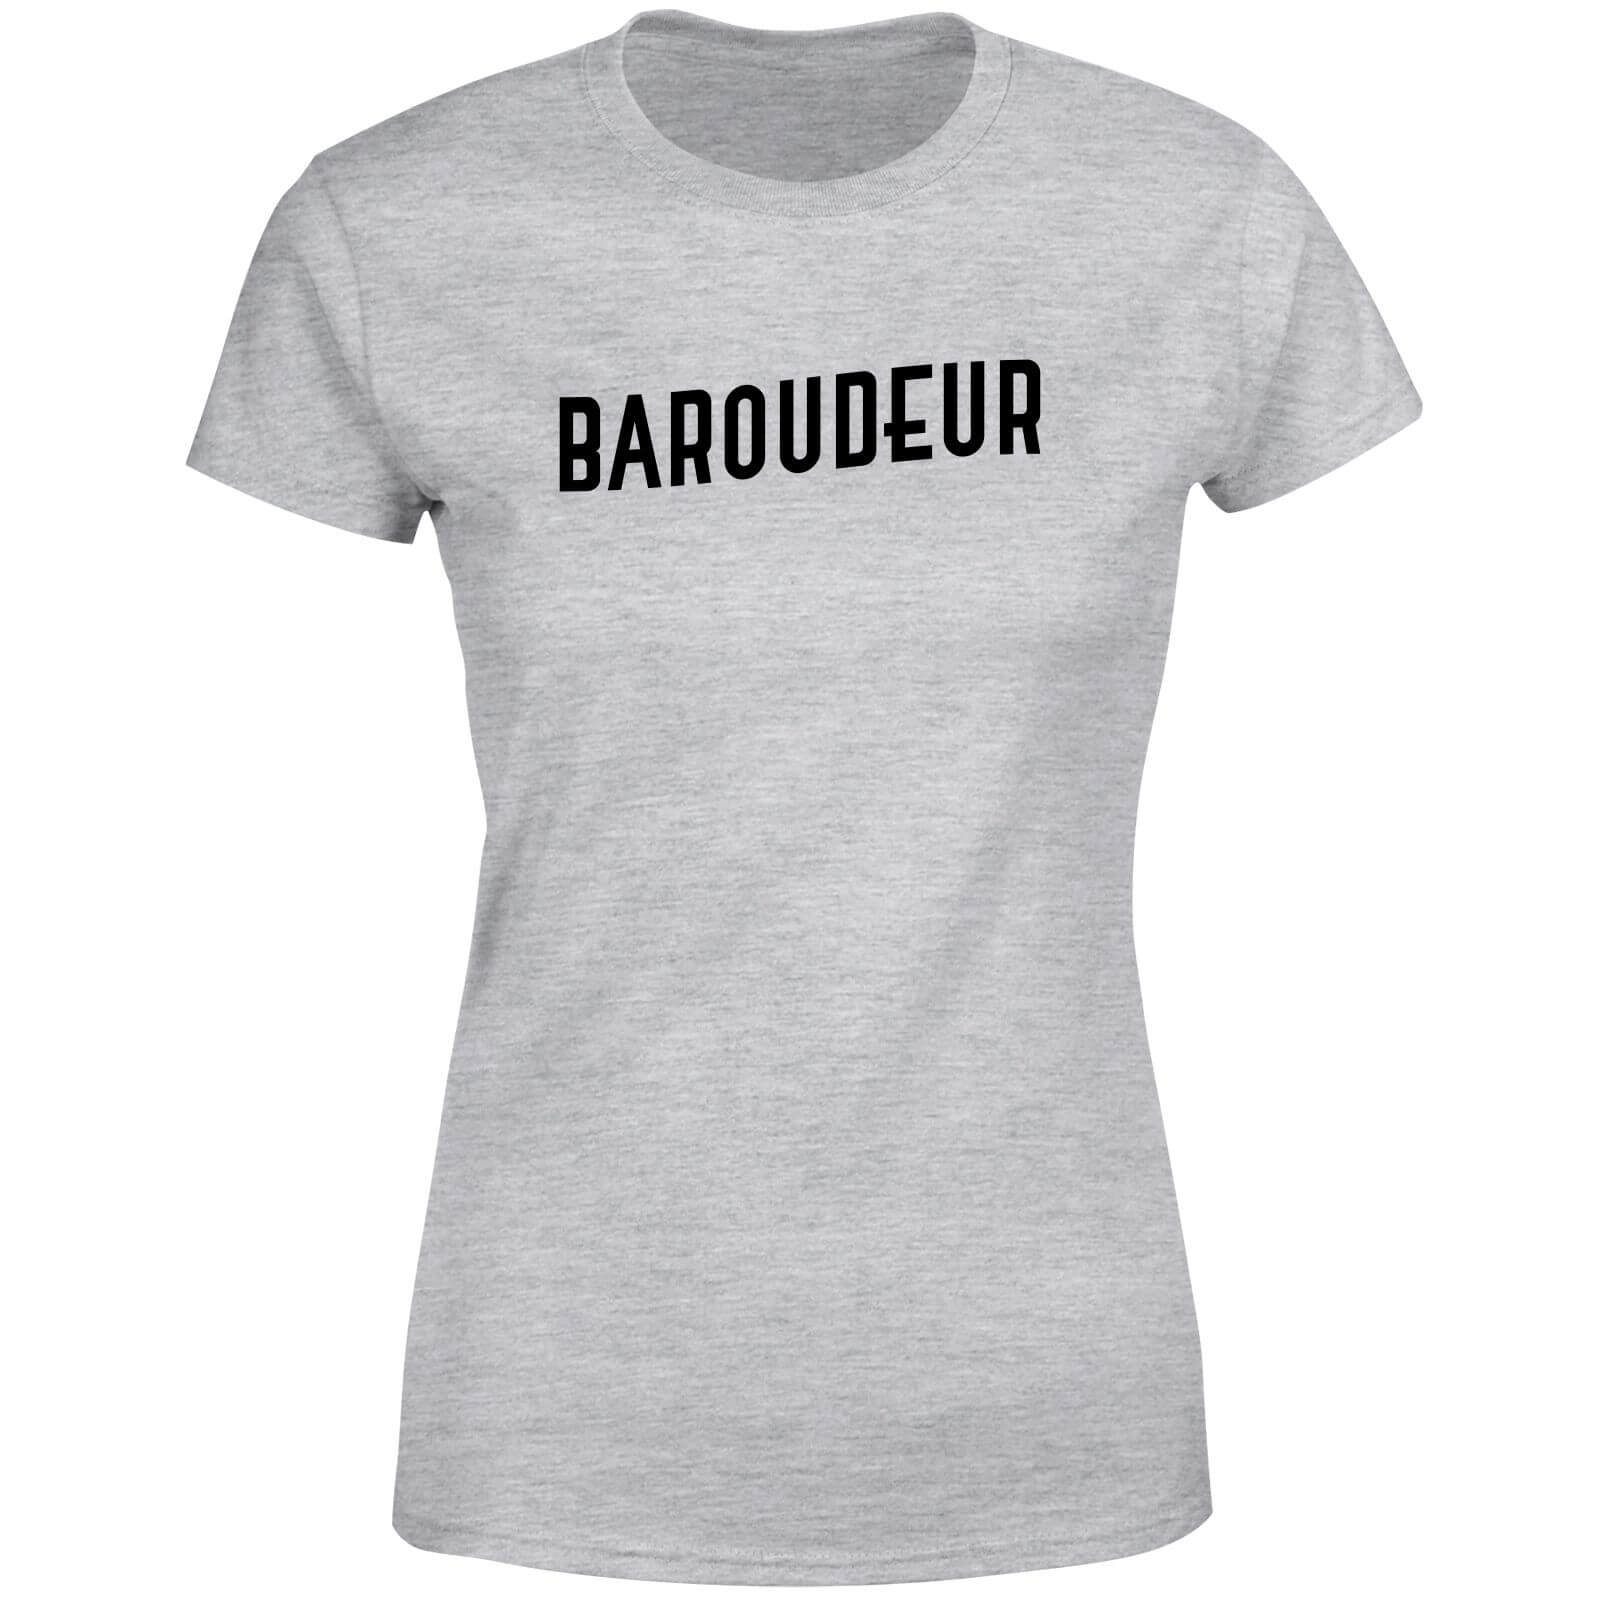 Baroudeur Women's T-Shirt - Grey - 3XL - Grey